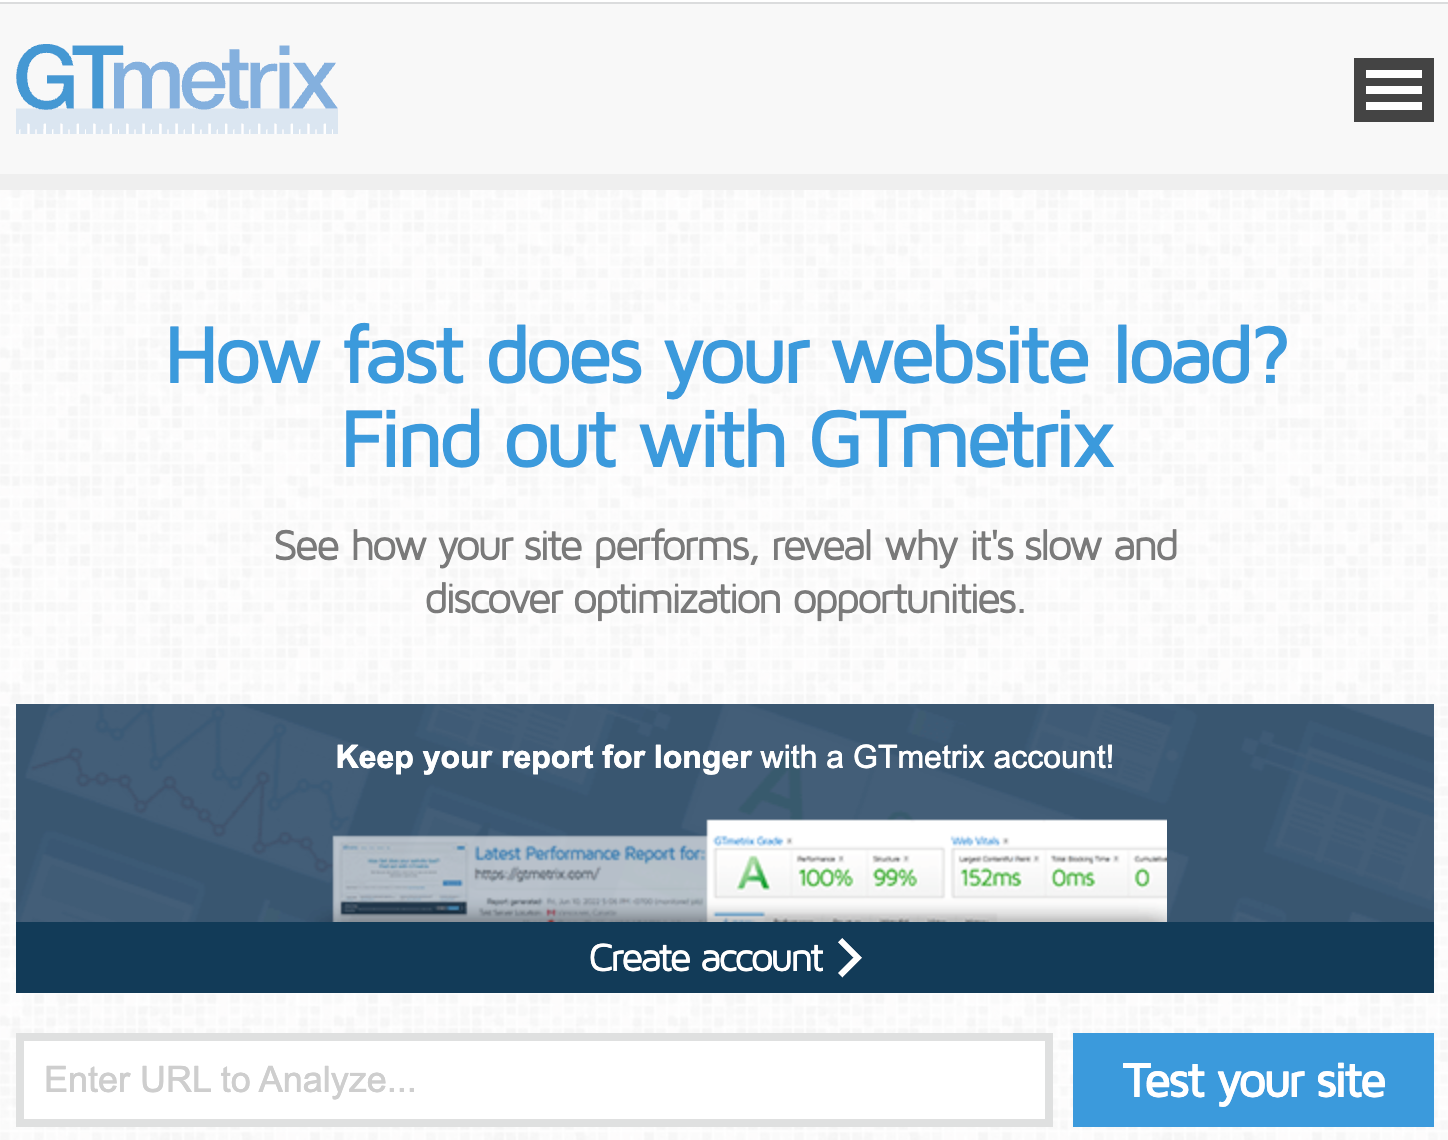 GTmetrix homepage interface